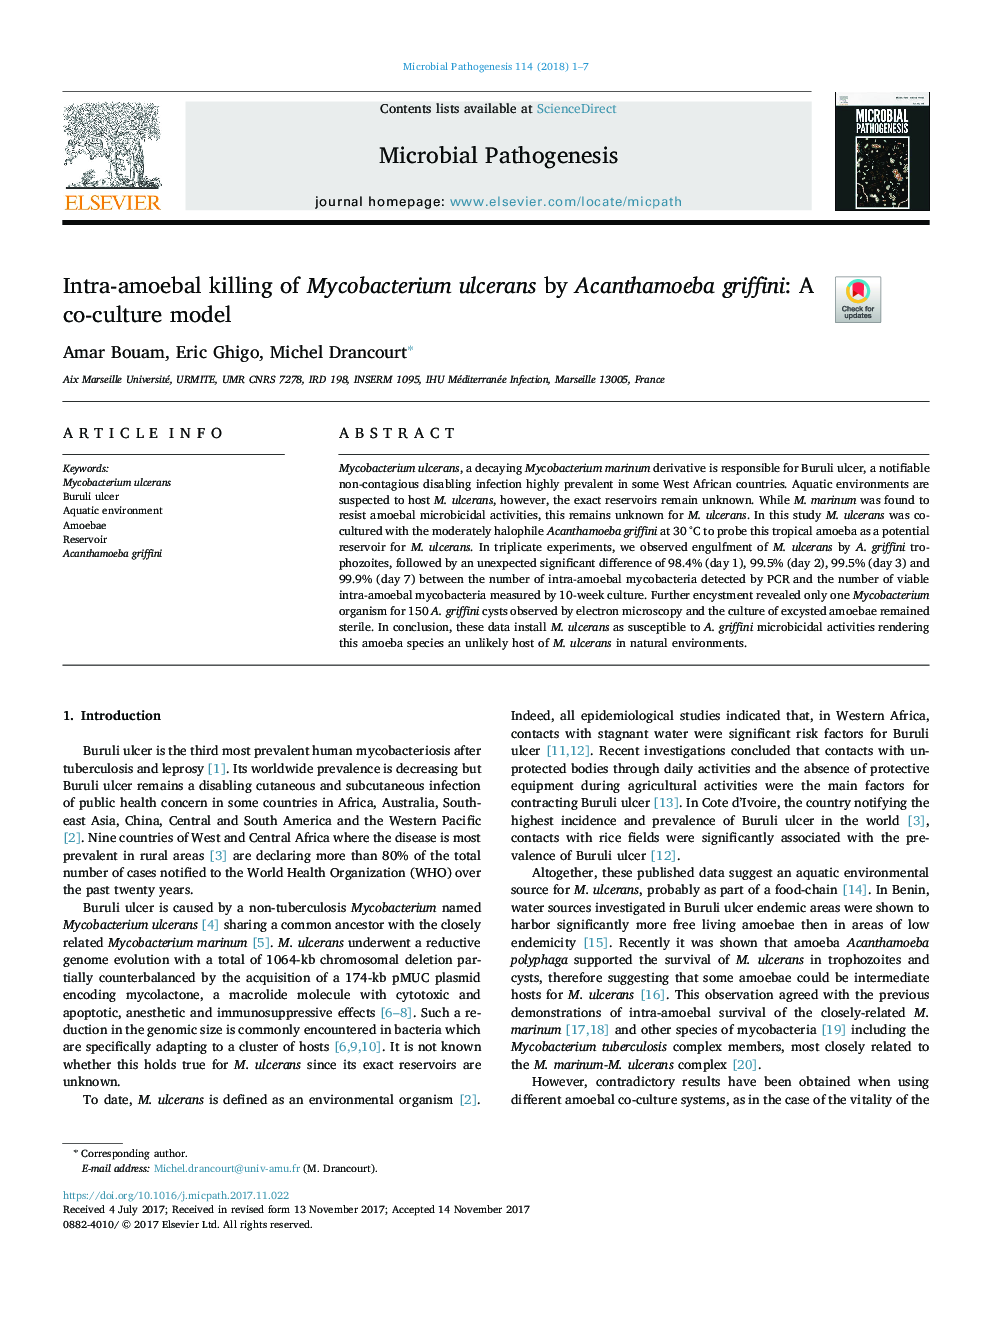 Intra-amoebal killing of Mycobacterium ulcerans by Acanthamoeba griffini: A co-culture model